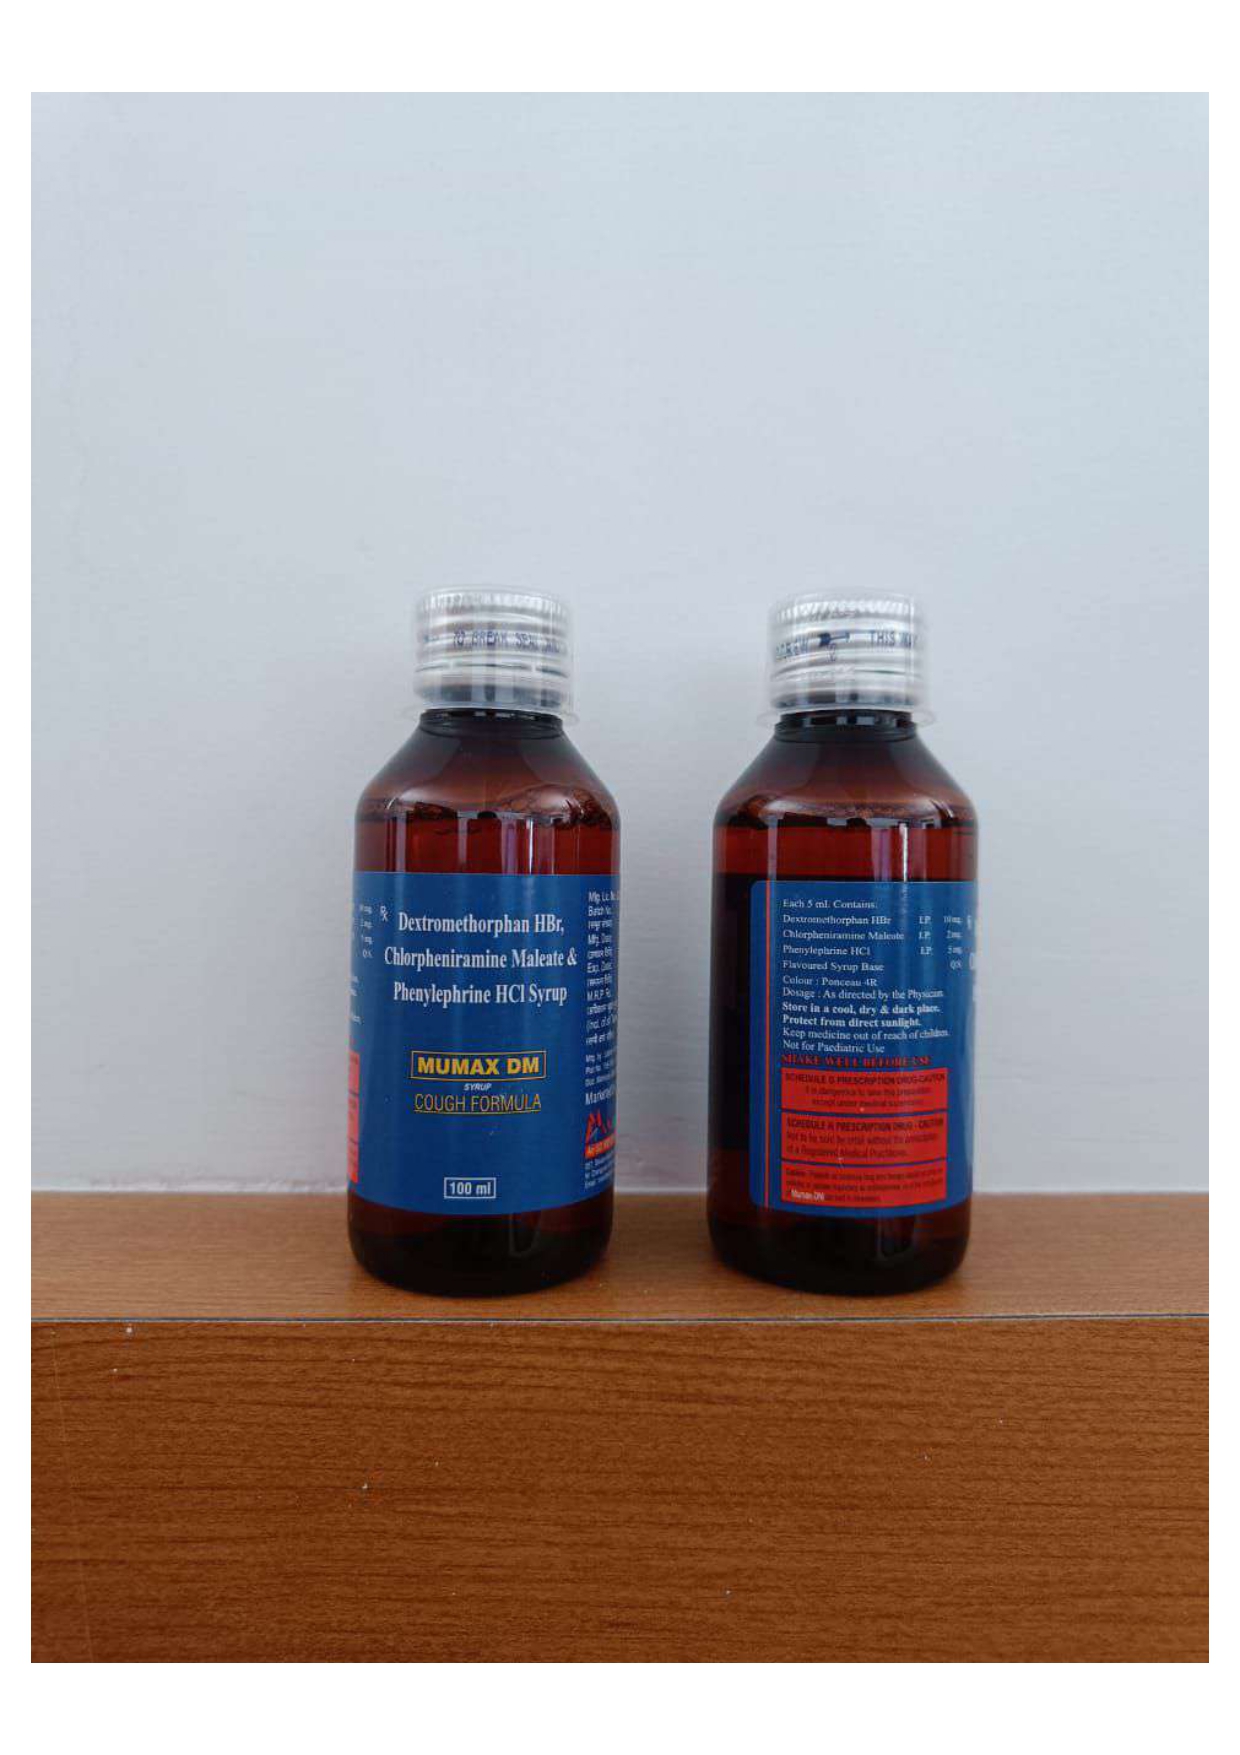 dextromethorphen 10mg + phenylephrine 5mg +
cpm 2mg syrup